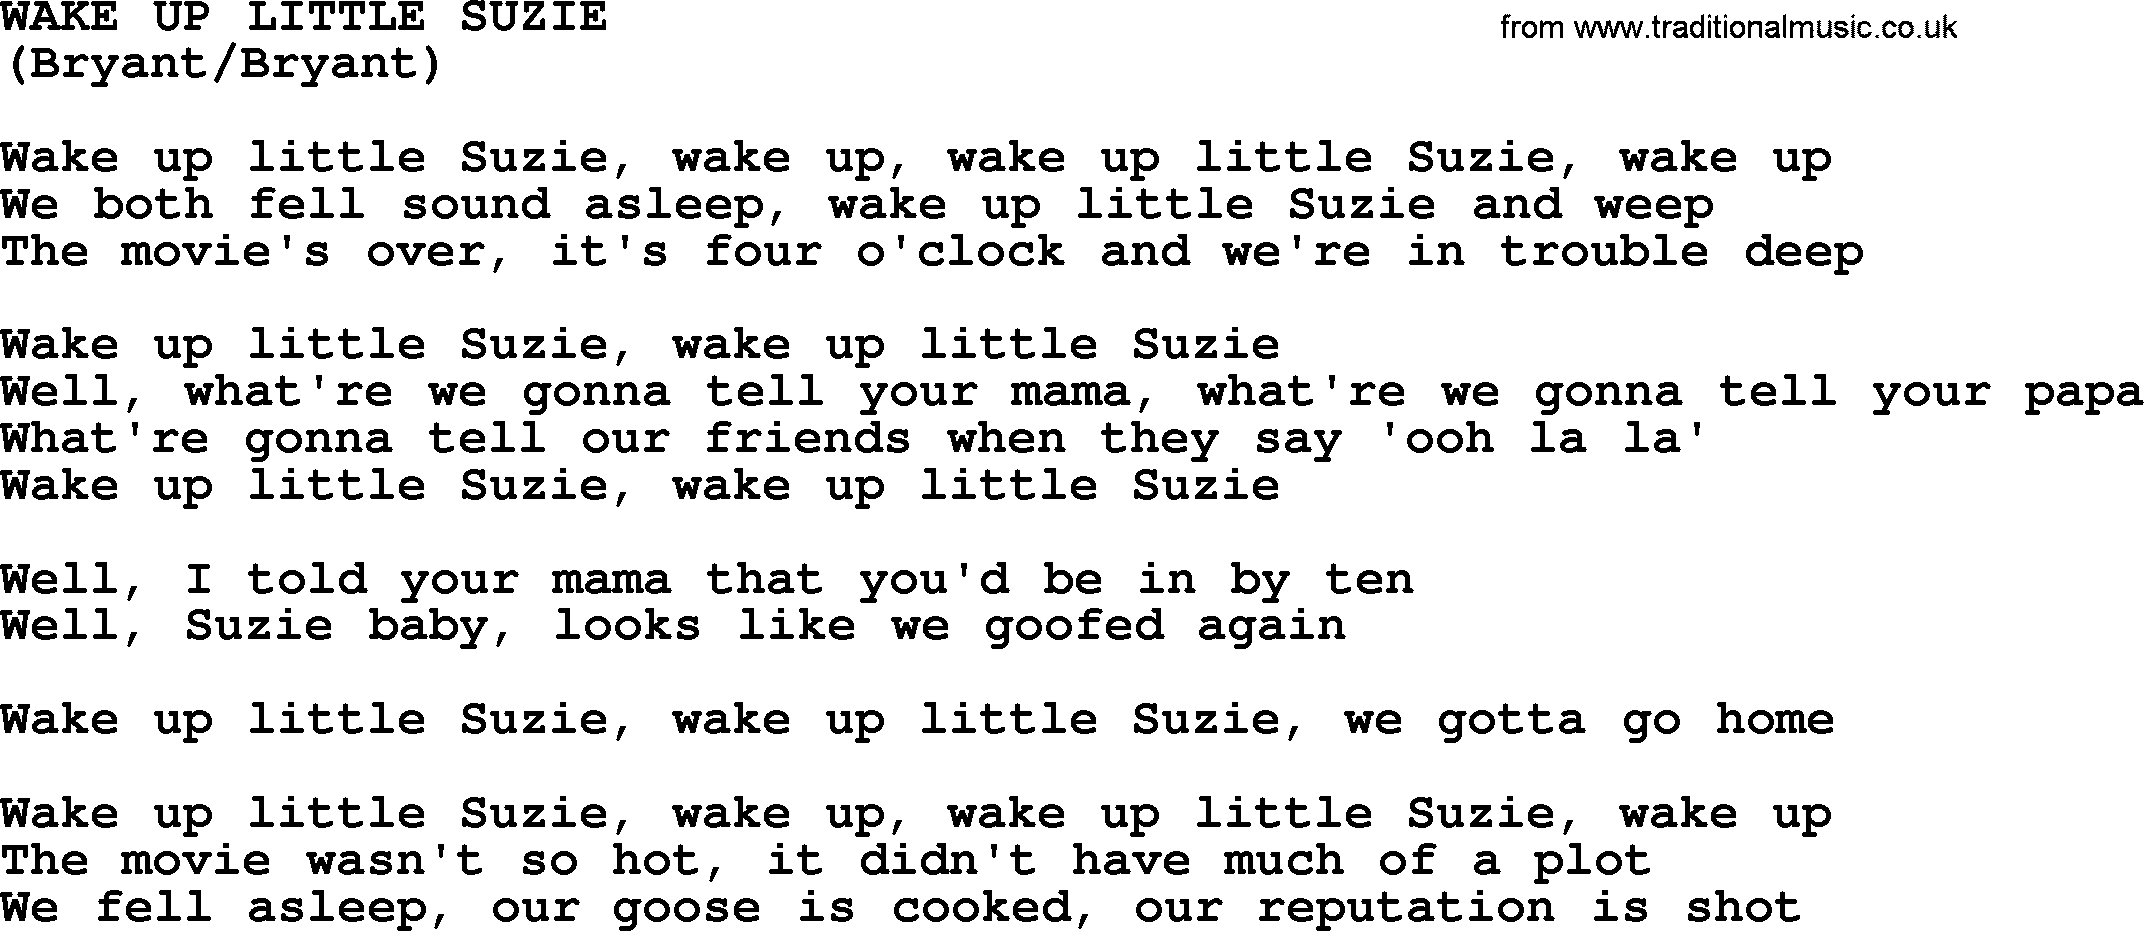 Wake Up Little Suzie, by The Byrds - lyrics with pdf